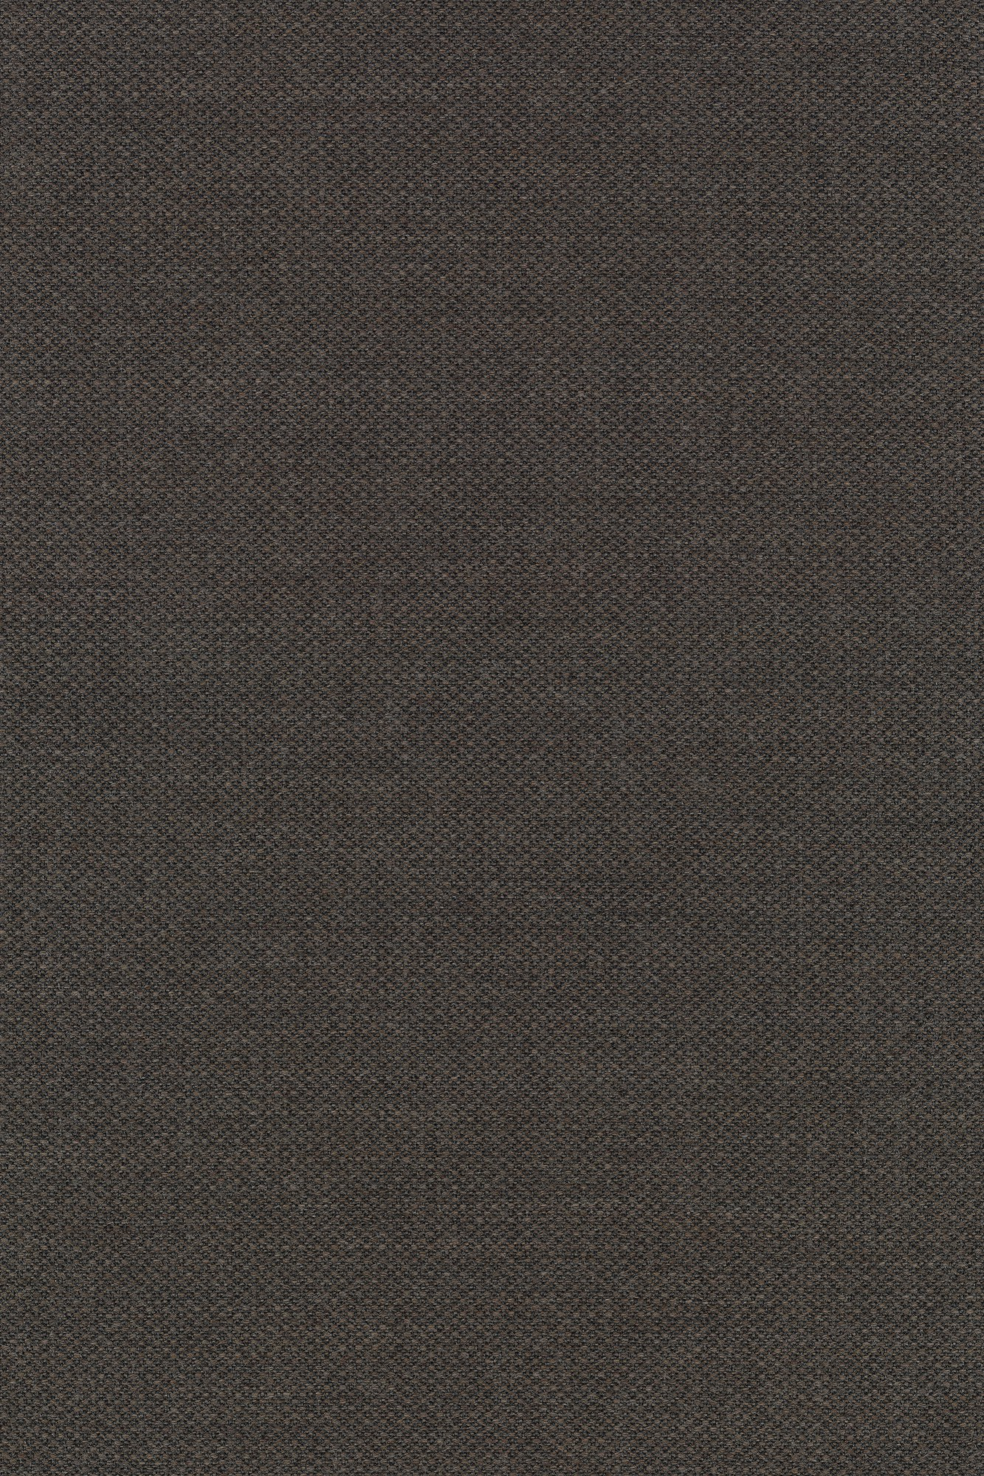 Fabric sample Fiord 371 grey